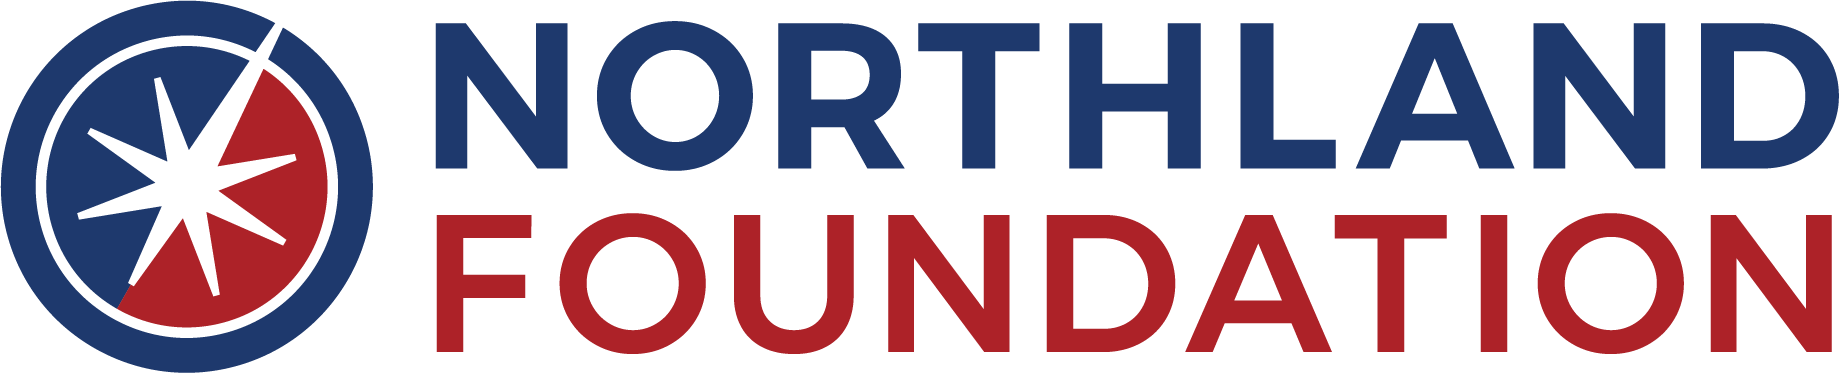 Northland Foundation